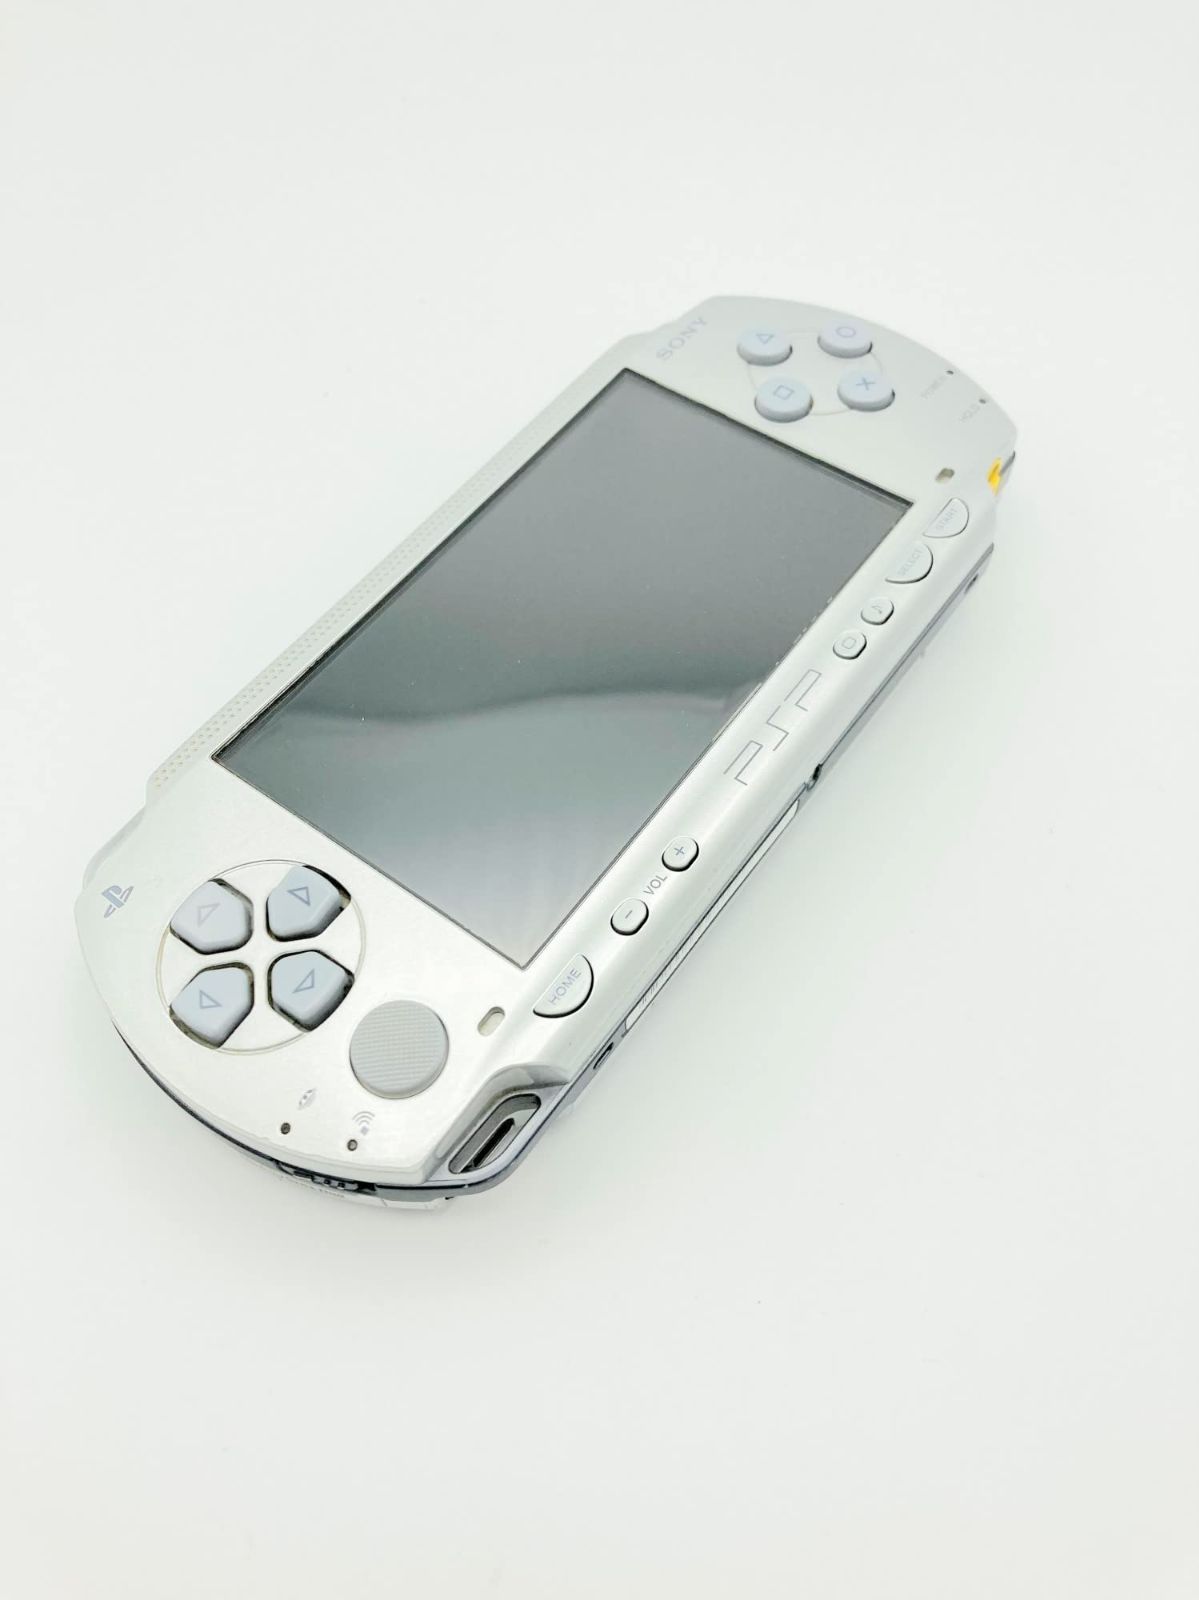 PSP「プレイステーション・ポータブル」 アイス・シルバー (PSP-2000IS 